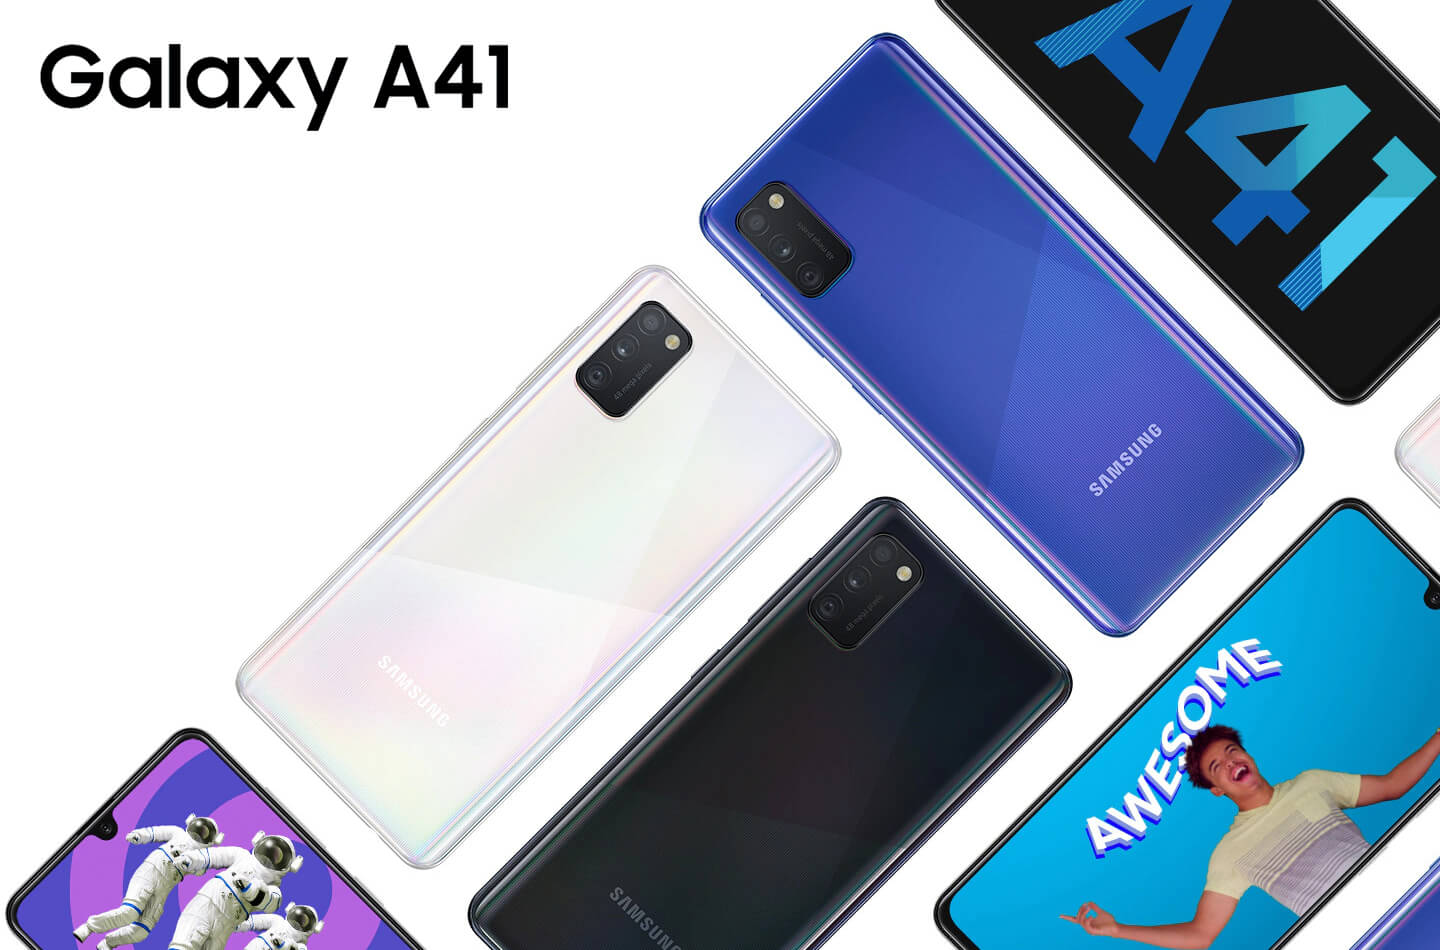 Samsung Galaxy A41 waterdichte telefoon (A-Serie 2020 model) LetsGoDigital